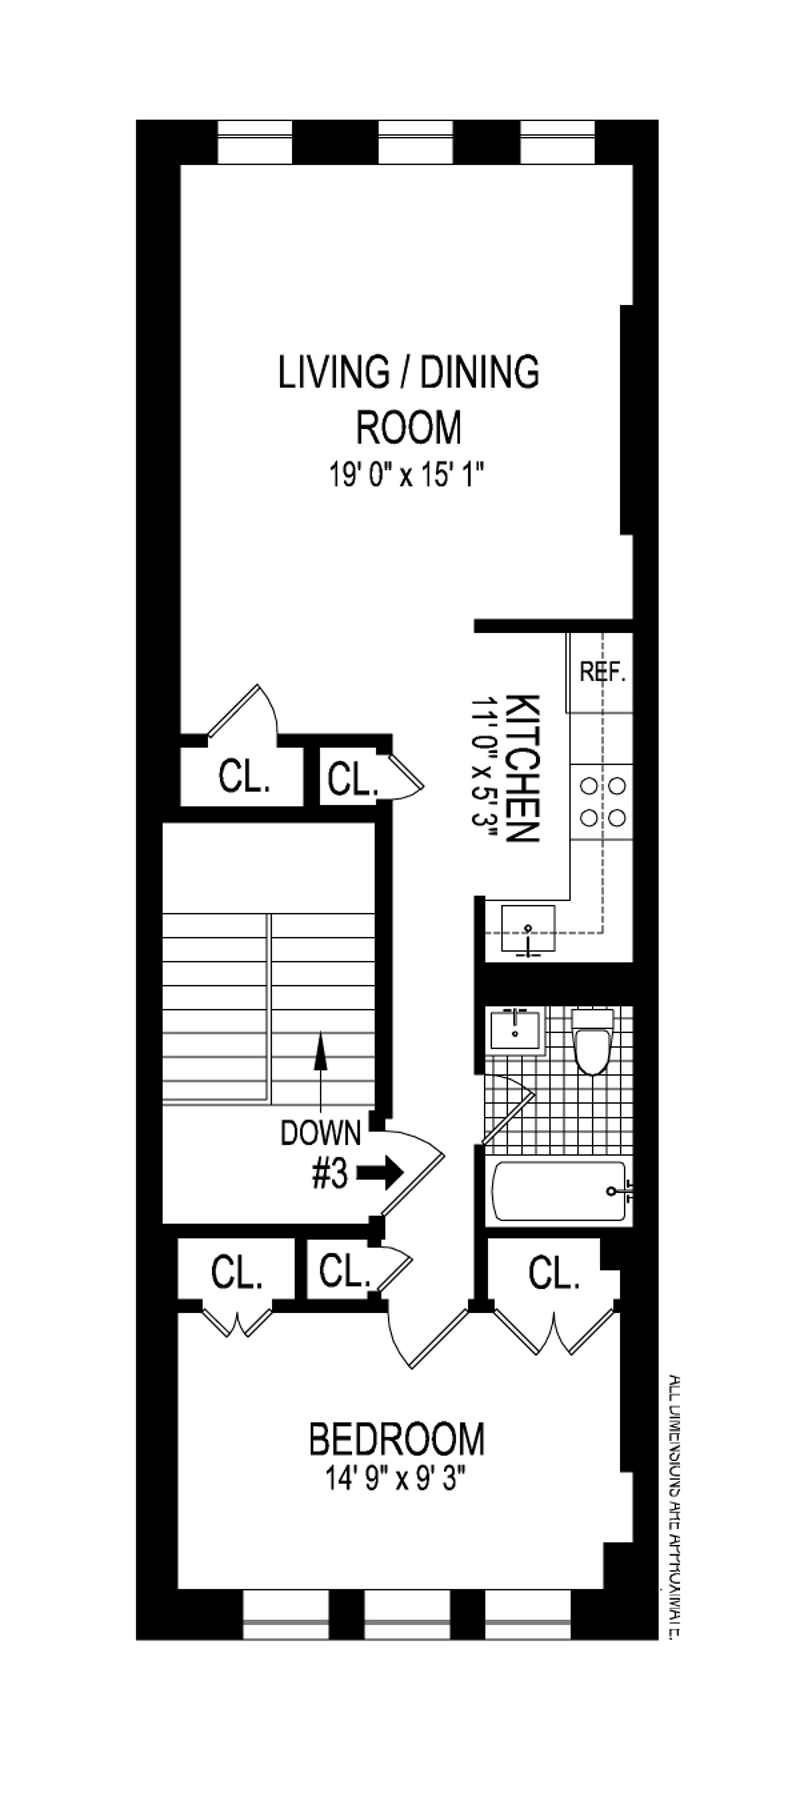 Floorplan for 317 West 112th Street